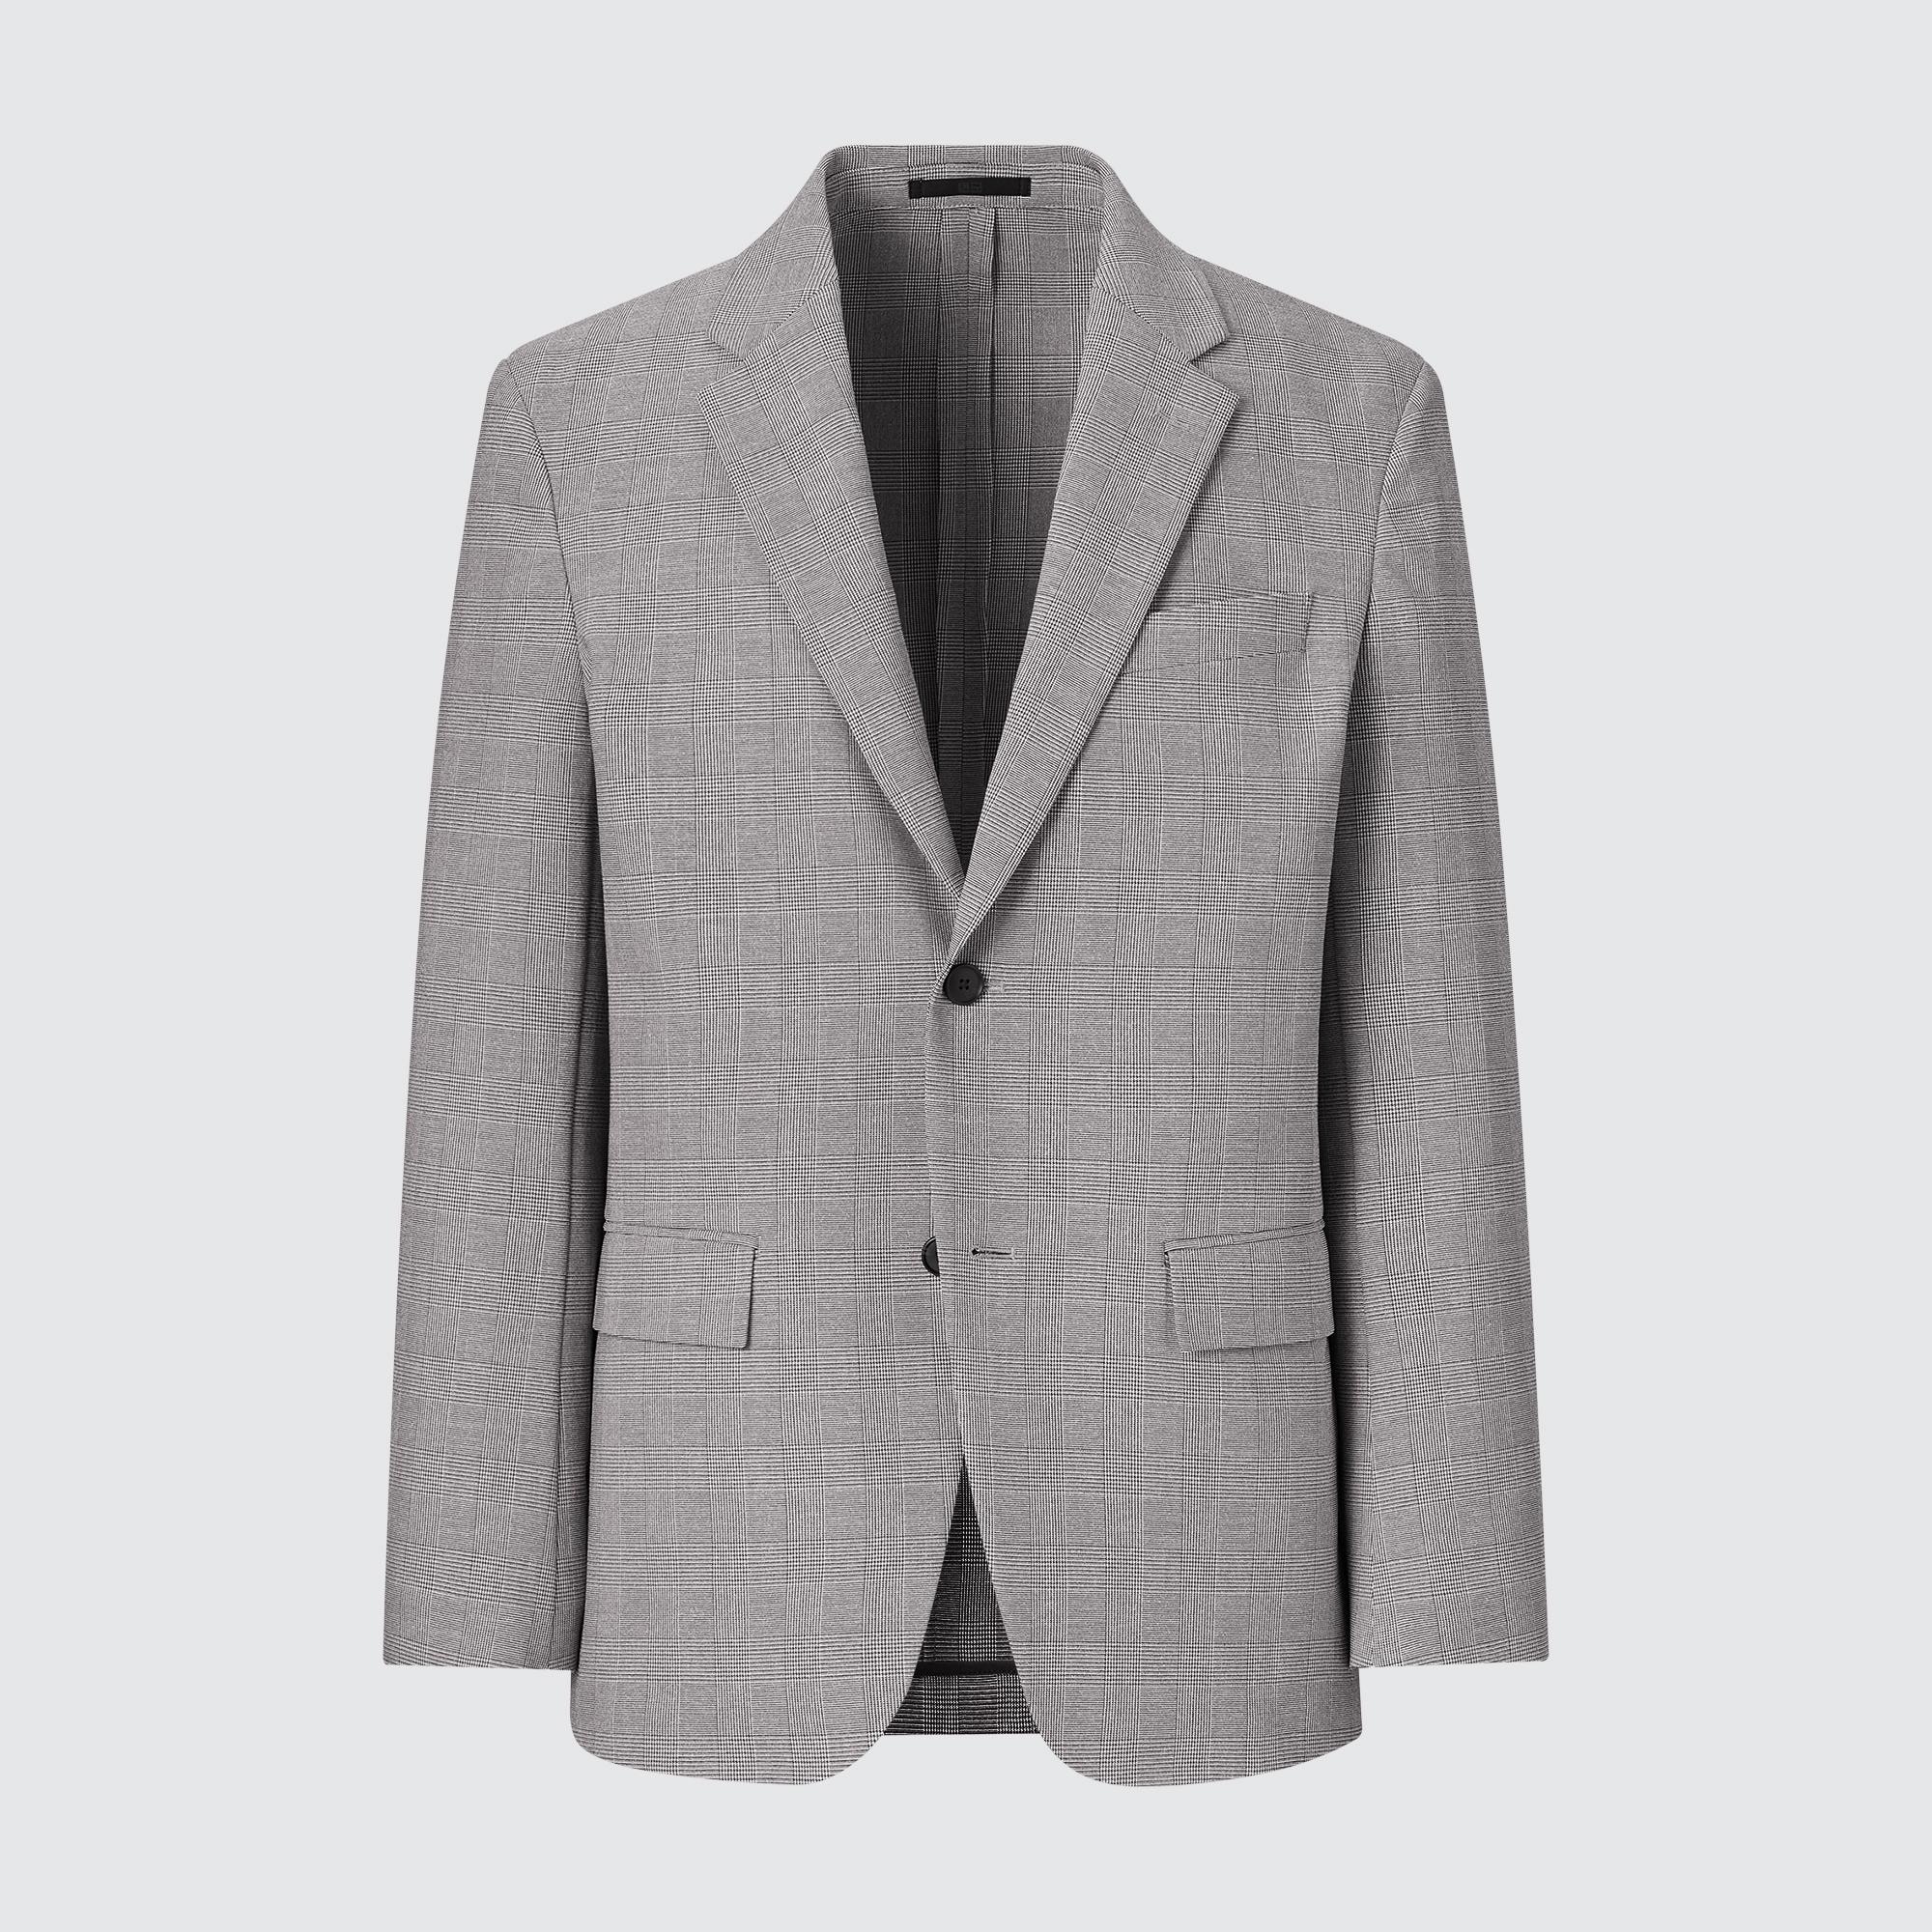 Куртка UNIQLO Kando Glen эластичная, серый брюки uniqlo smart comfort glen checked серый